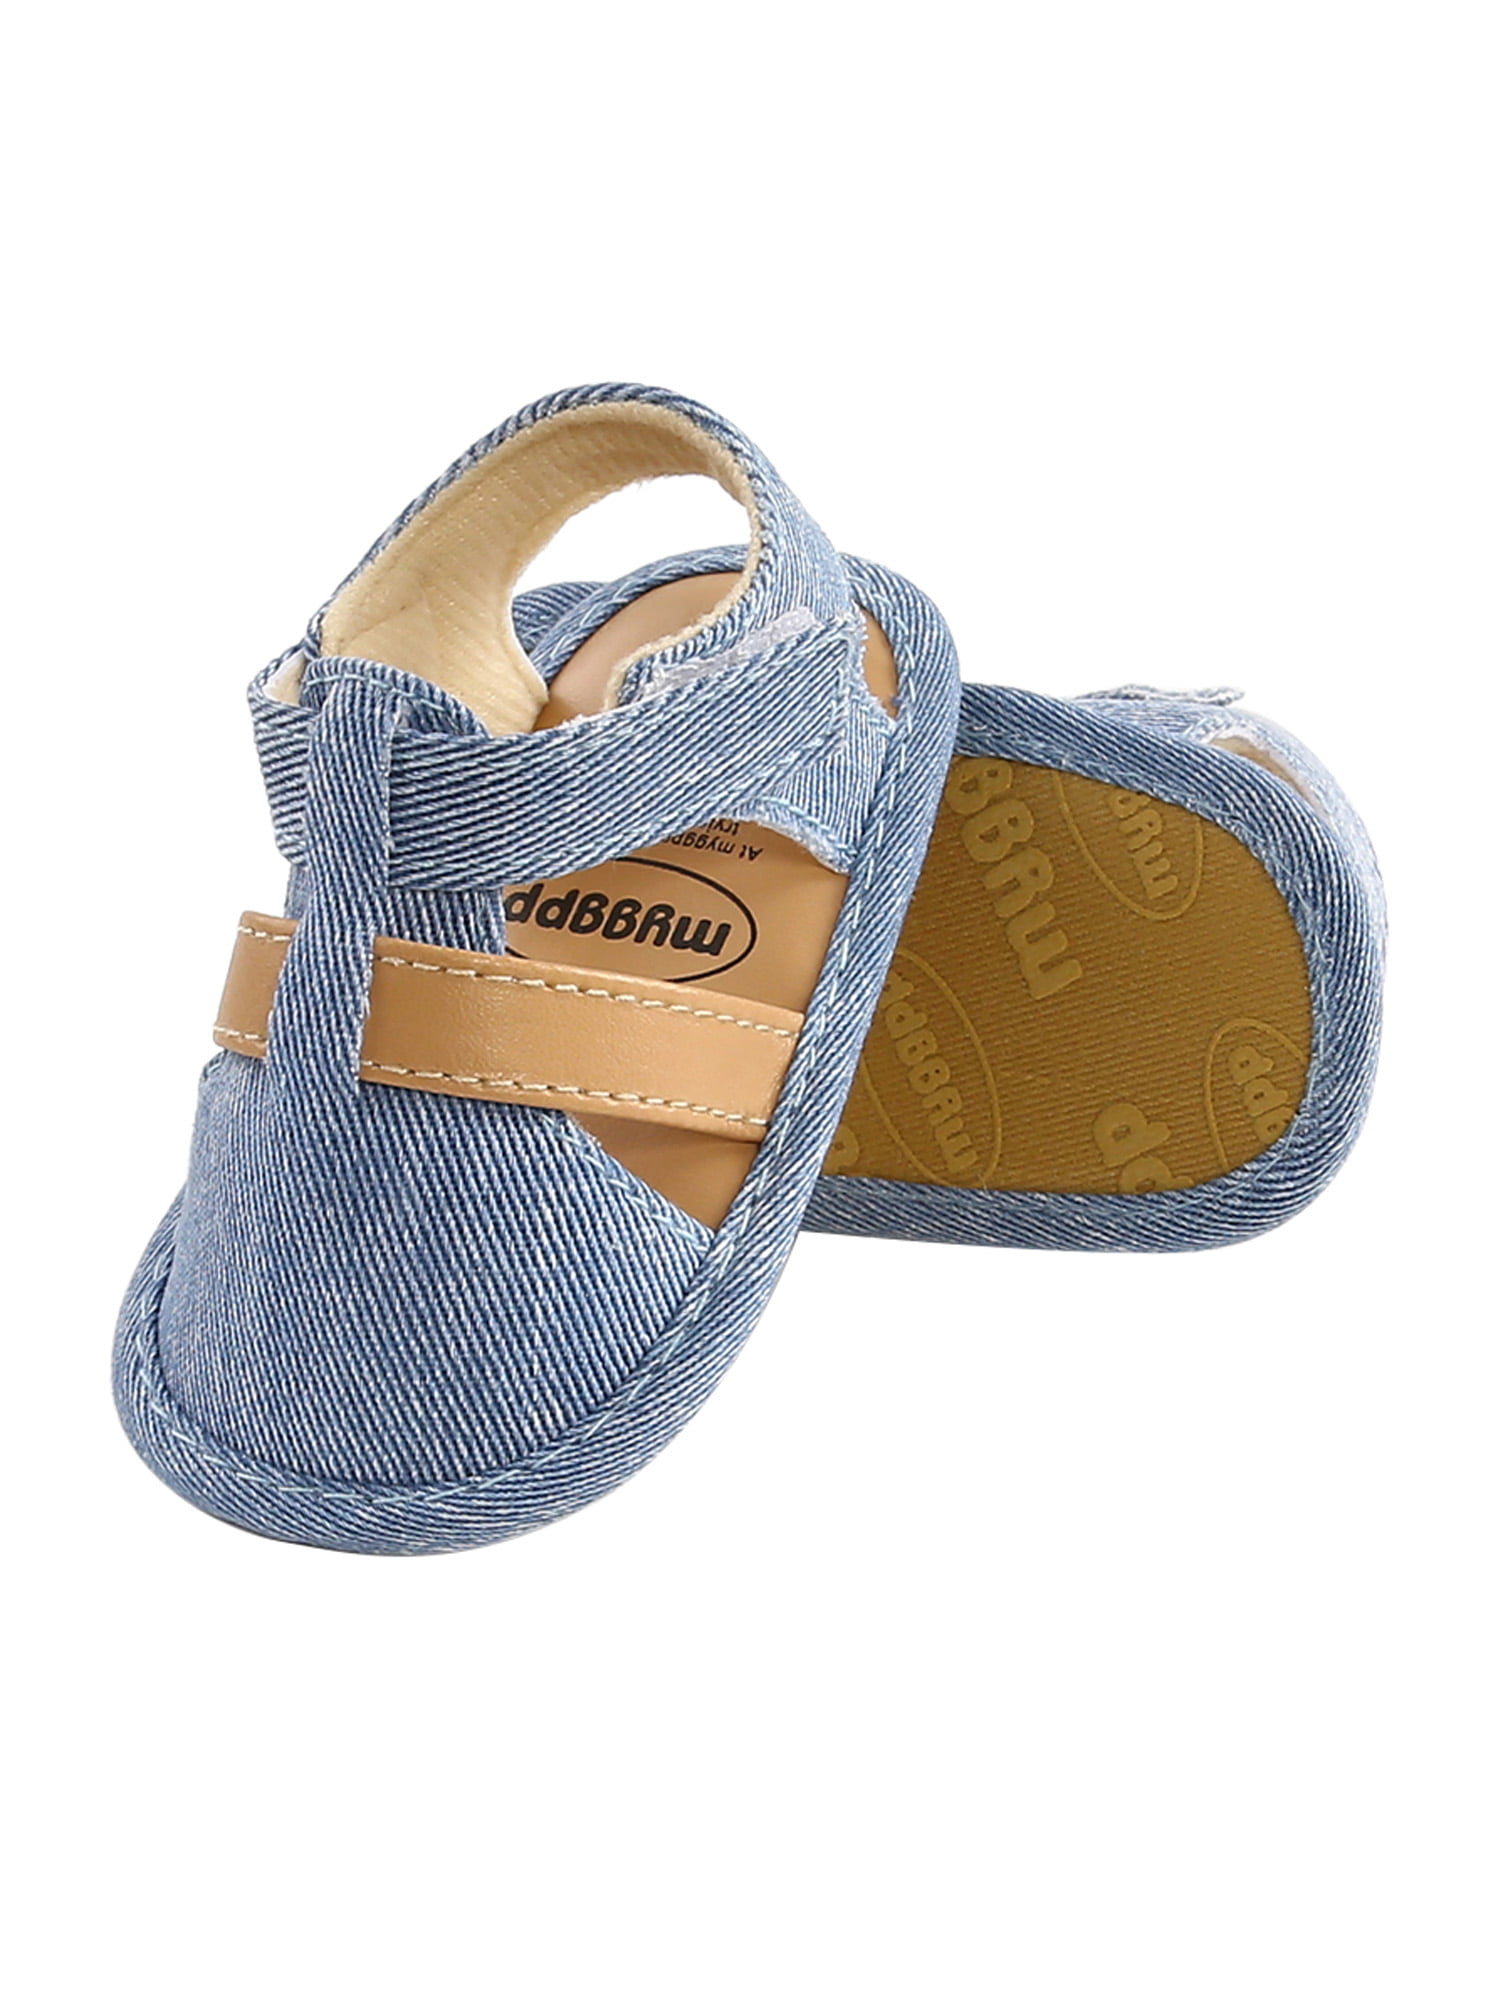 Diconna - Diconna Baby Boy Sandals 